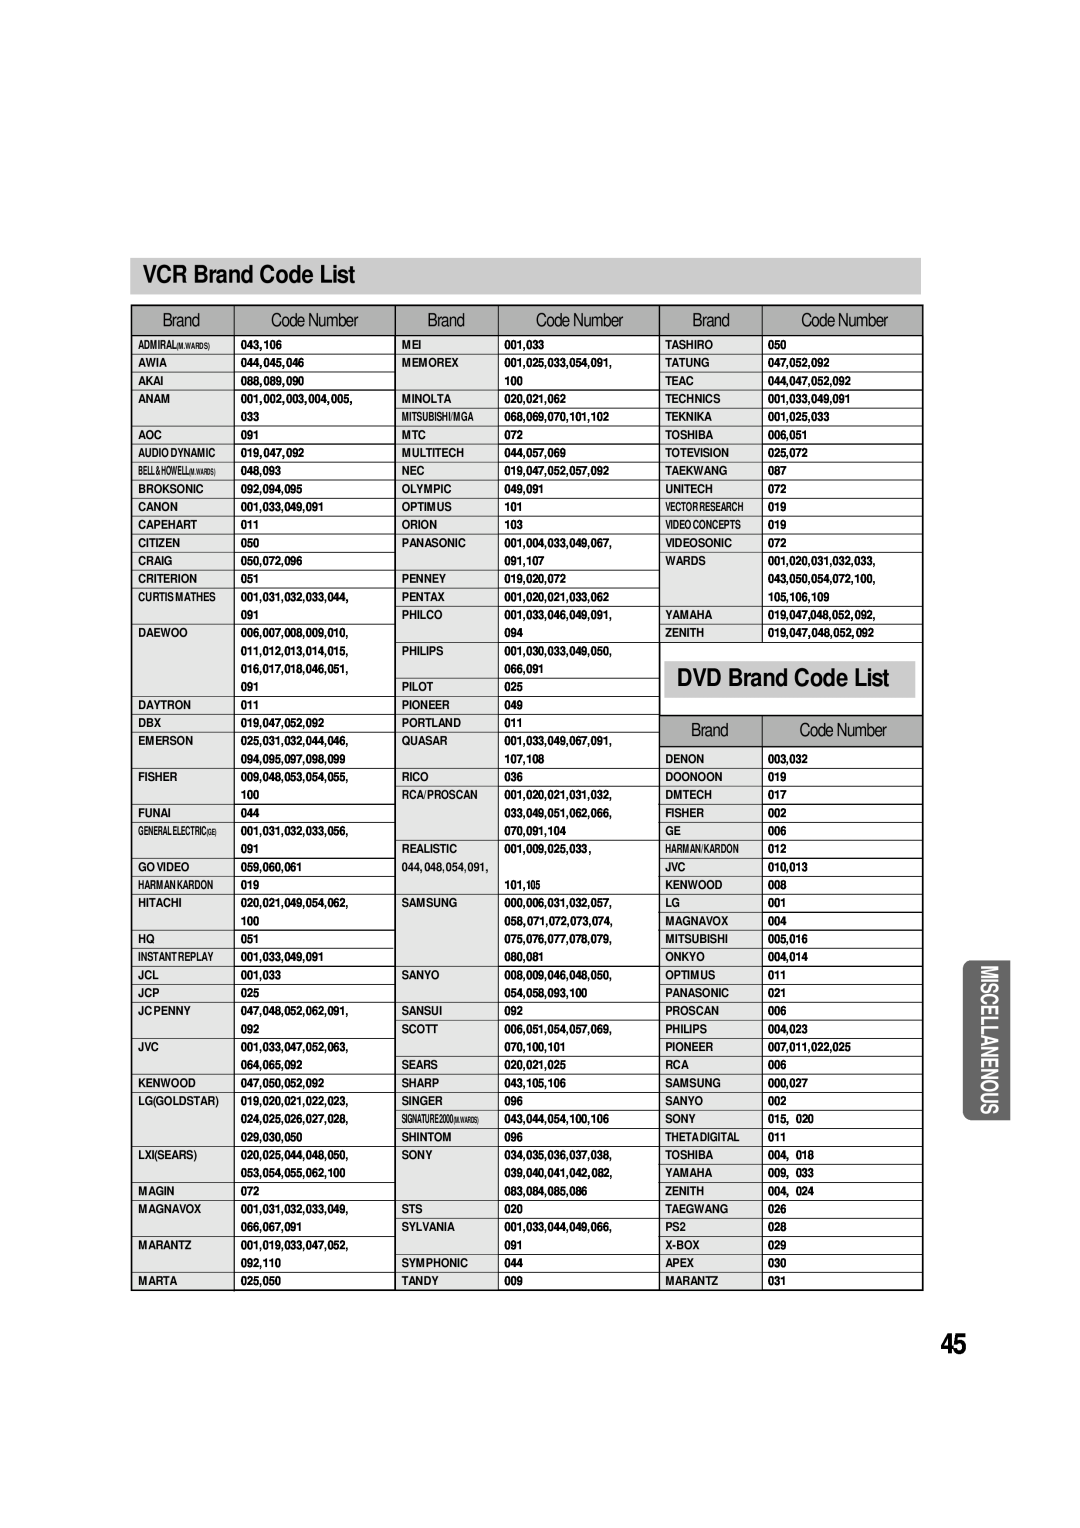 Samsung AH68-01853S, 20060510083254531, AV-R610 manual VCR Brand Code List, DVD Brand Code List, Miscellanenous 